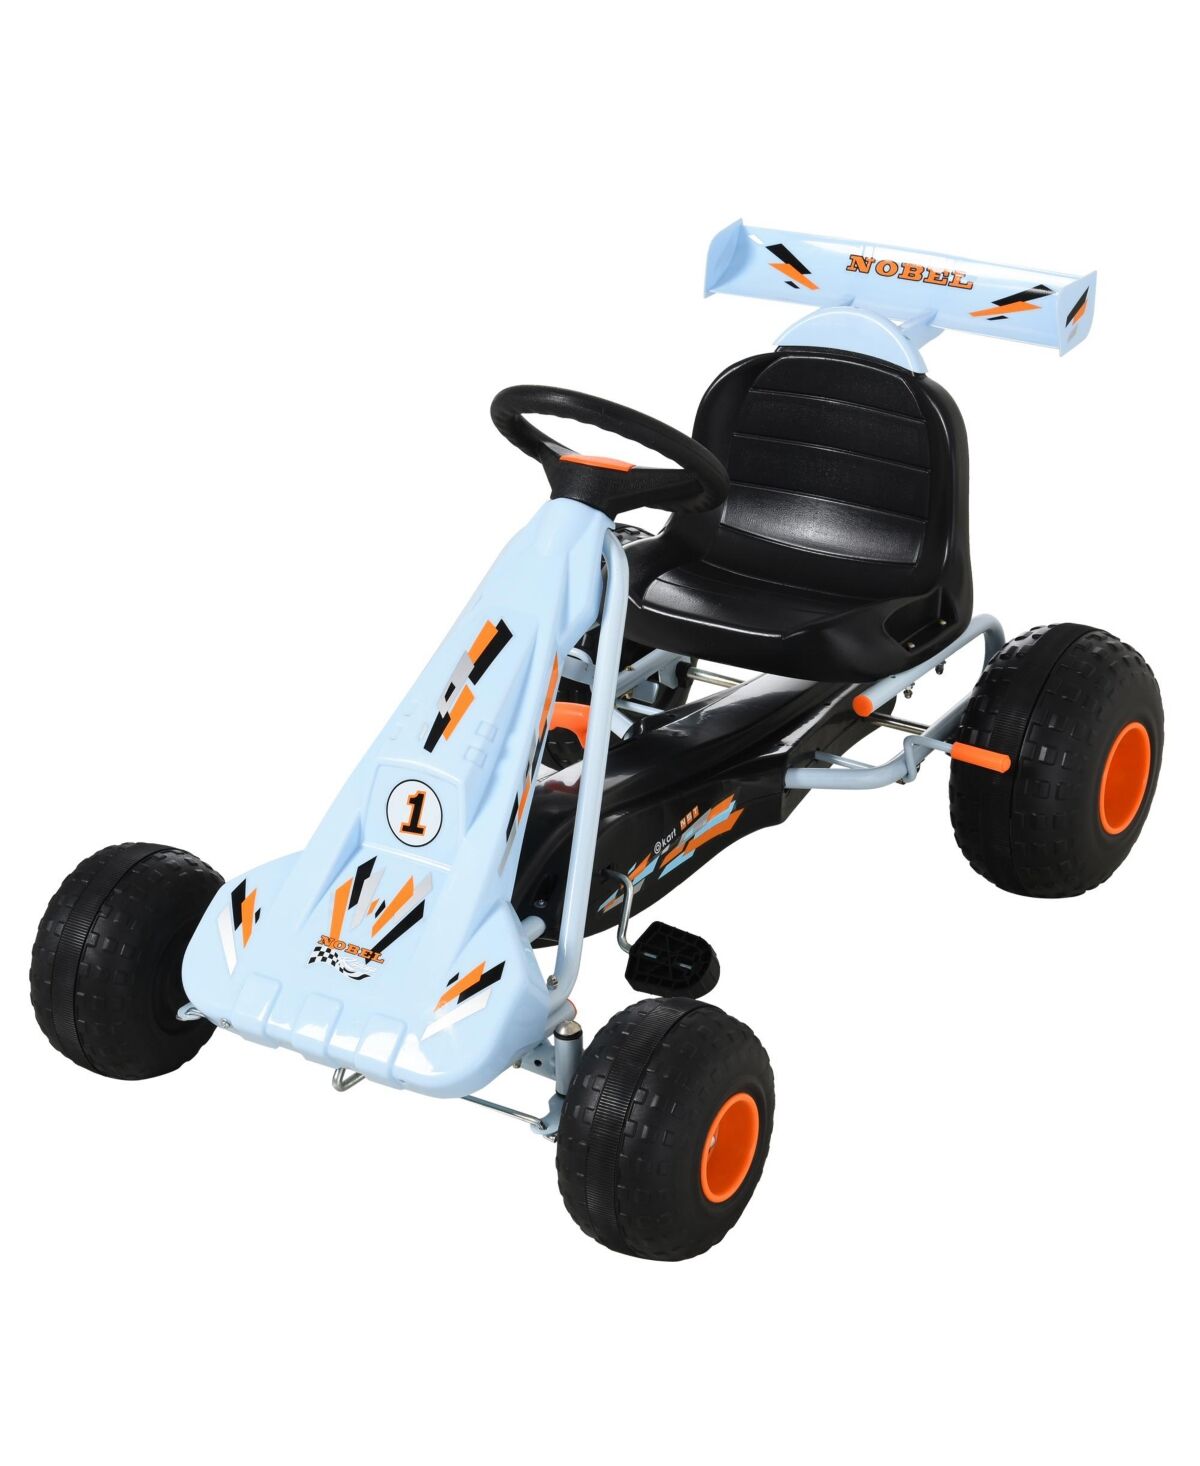 Aosom Pedal Go Kart Children Ride on Car w/ Adjustable Seat Plastic Wheel - Blue